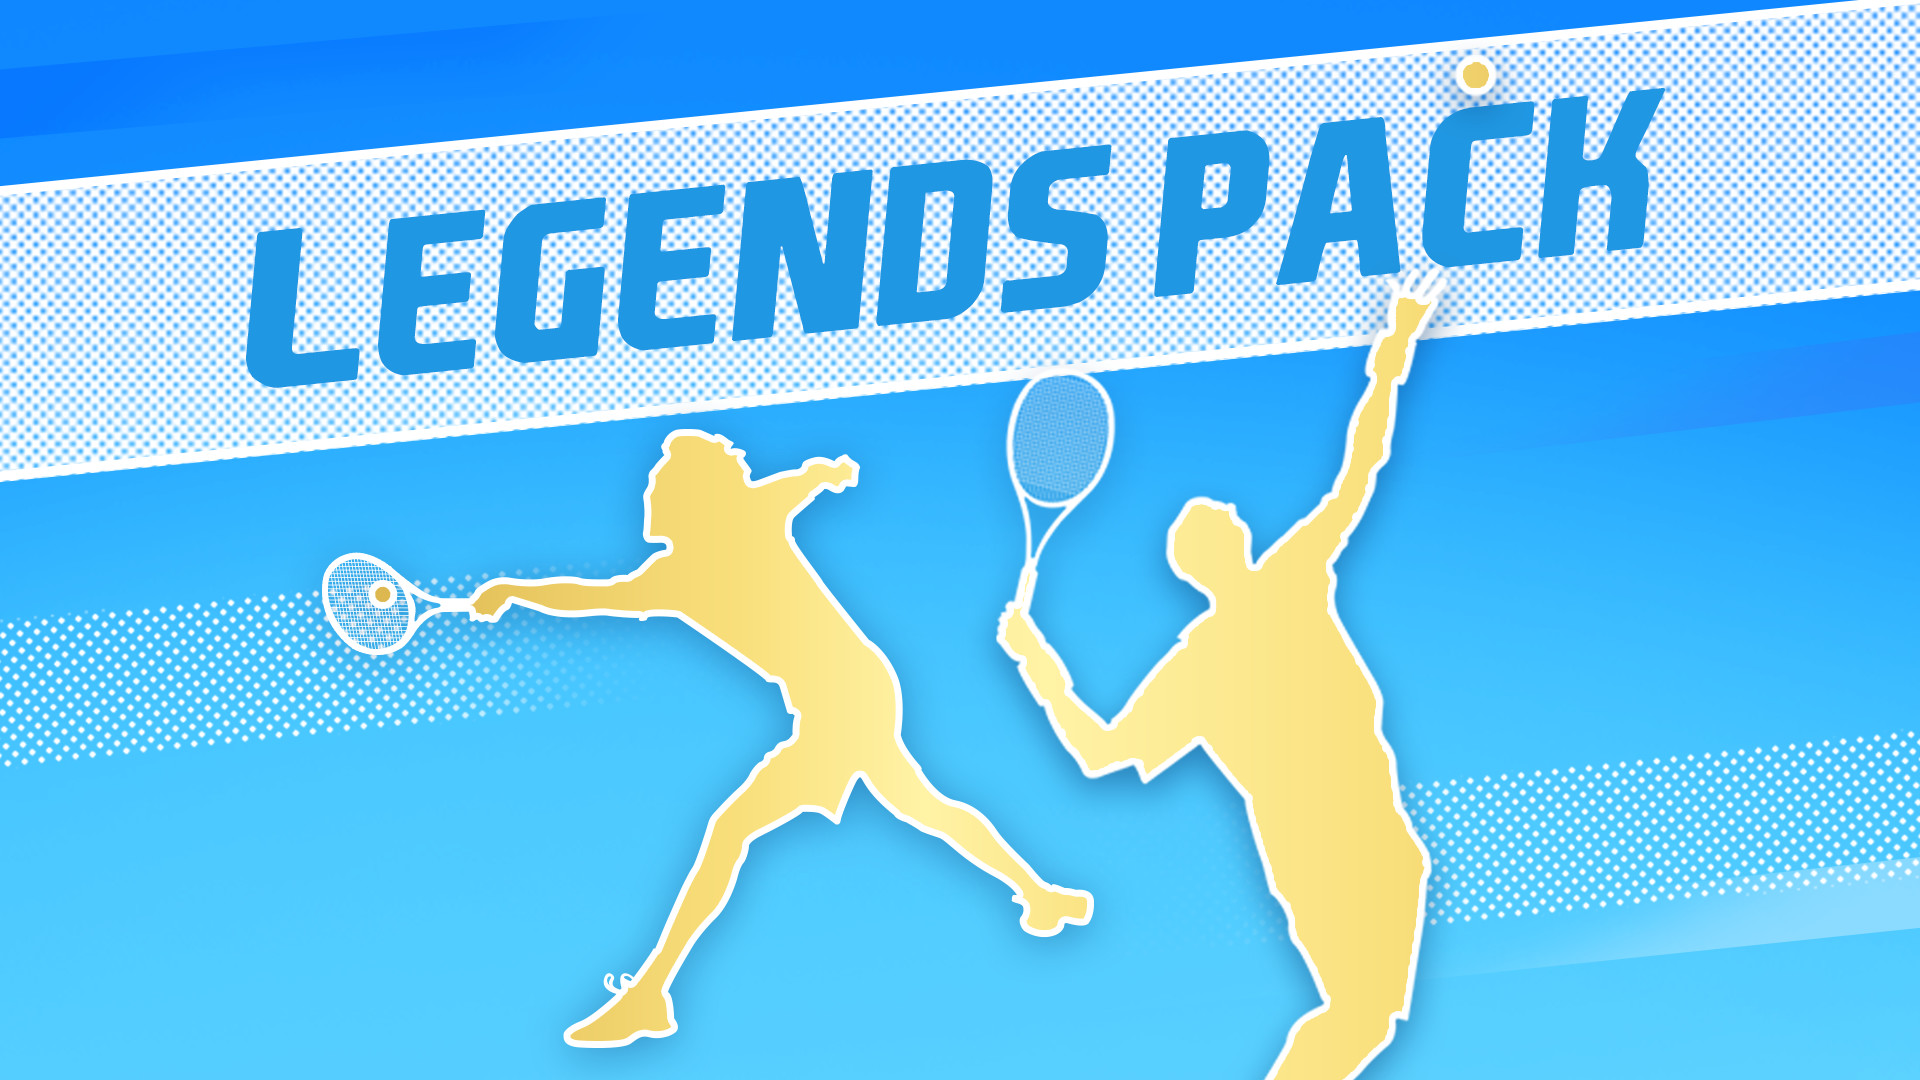 Tennis World Tour 2 Legends Pack on Steam